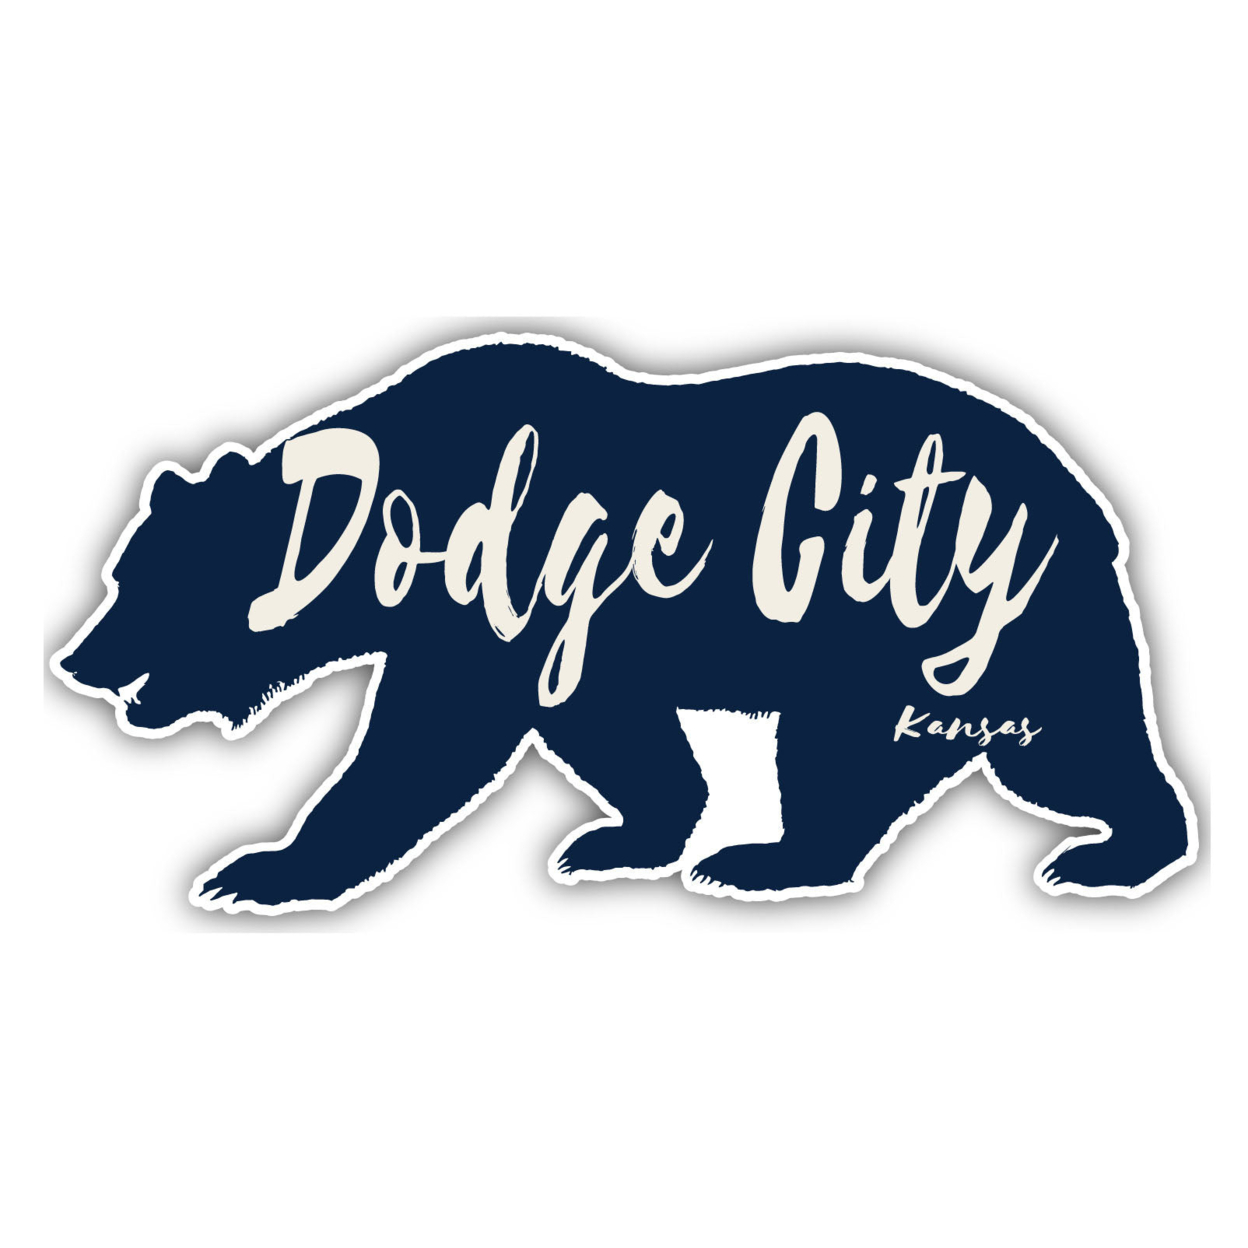 Dodge City Kansas Souvenir Decorative Stickers (Choose Theme And Size) - 4-Pack, 8-Inch, Tent